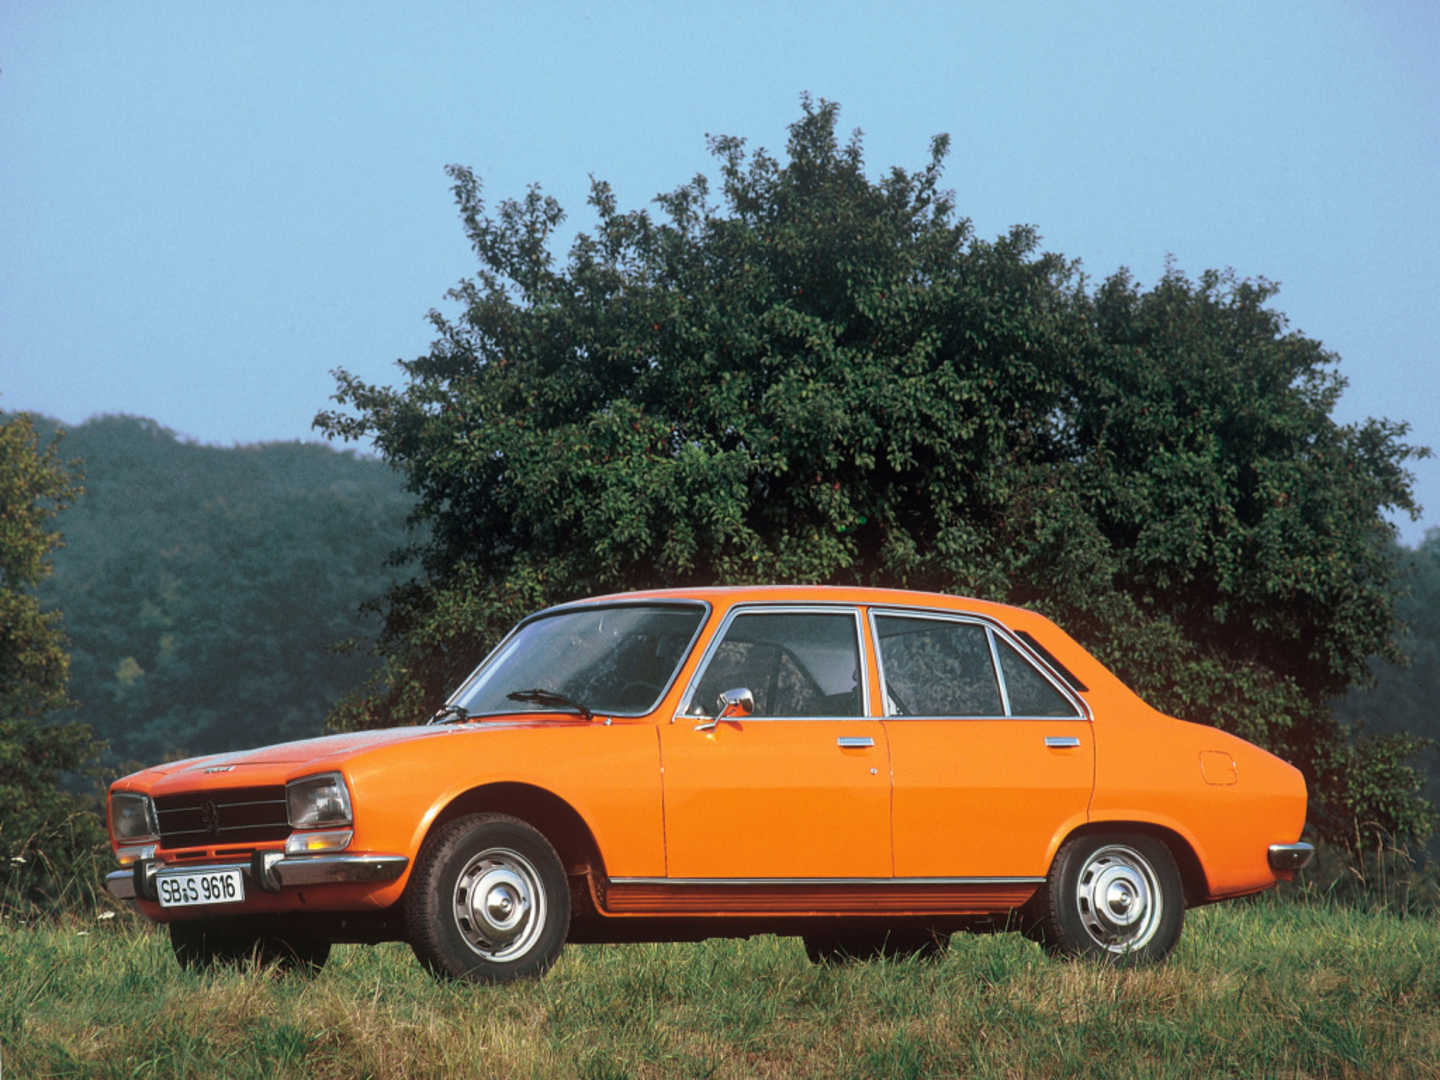 Peugeot 504 orange dans l'herbe